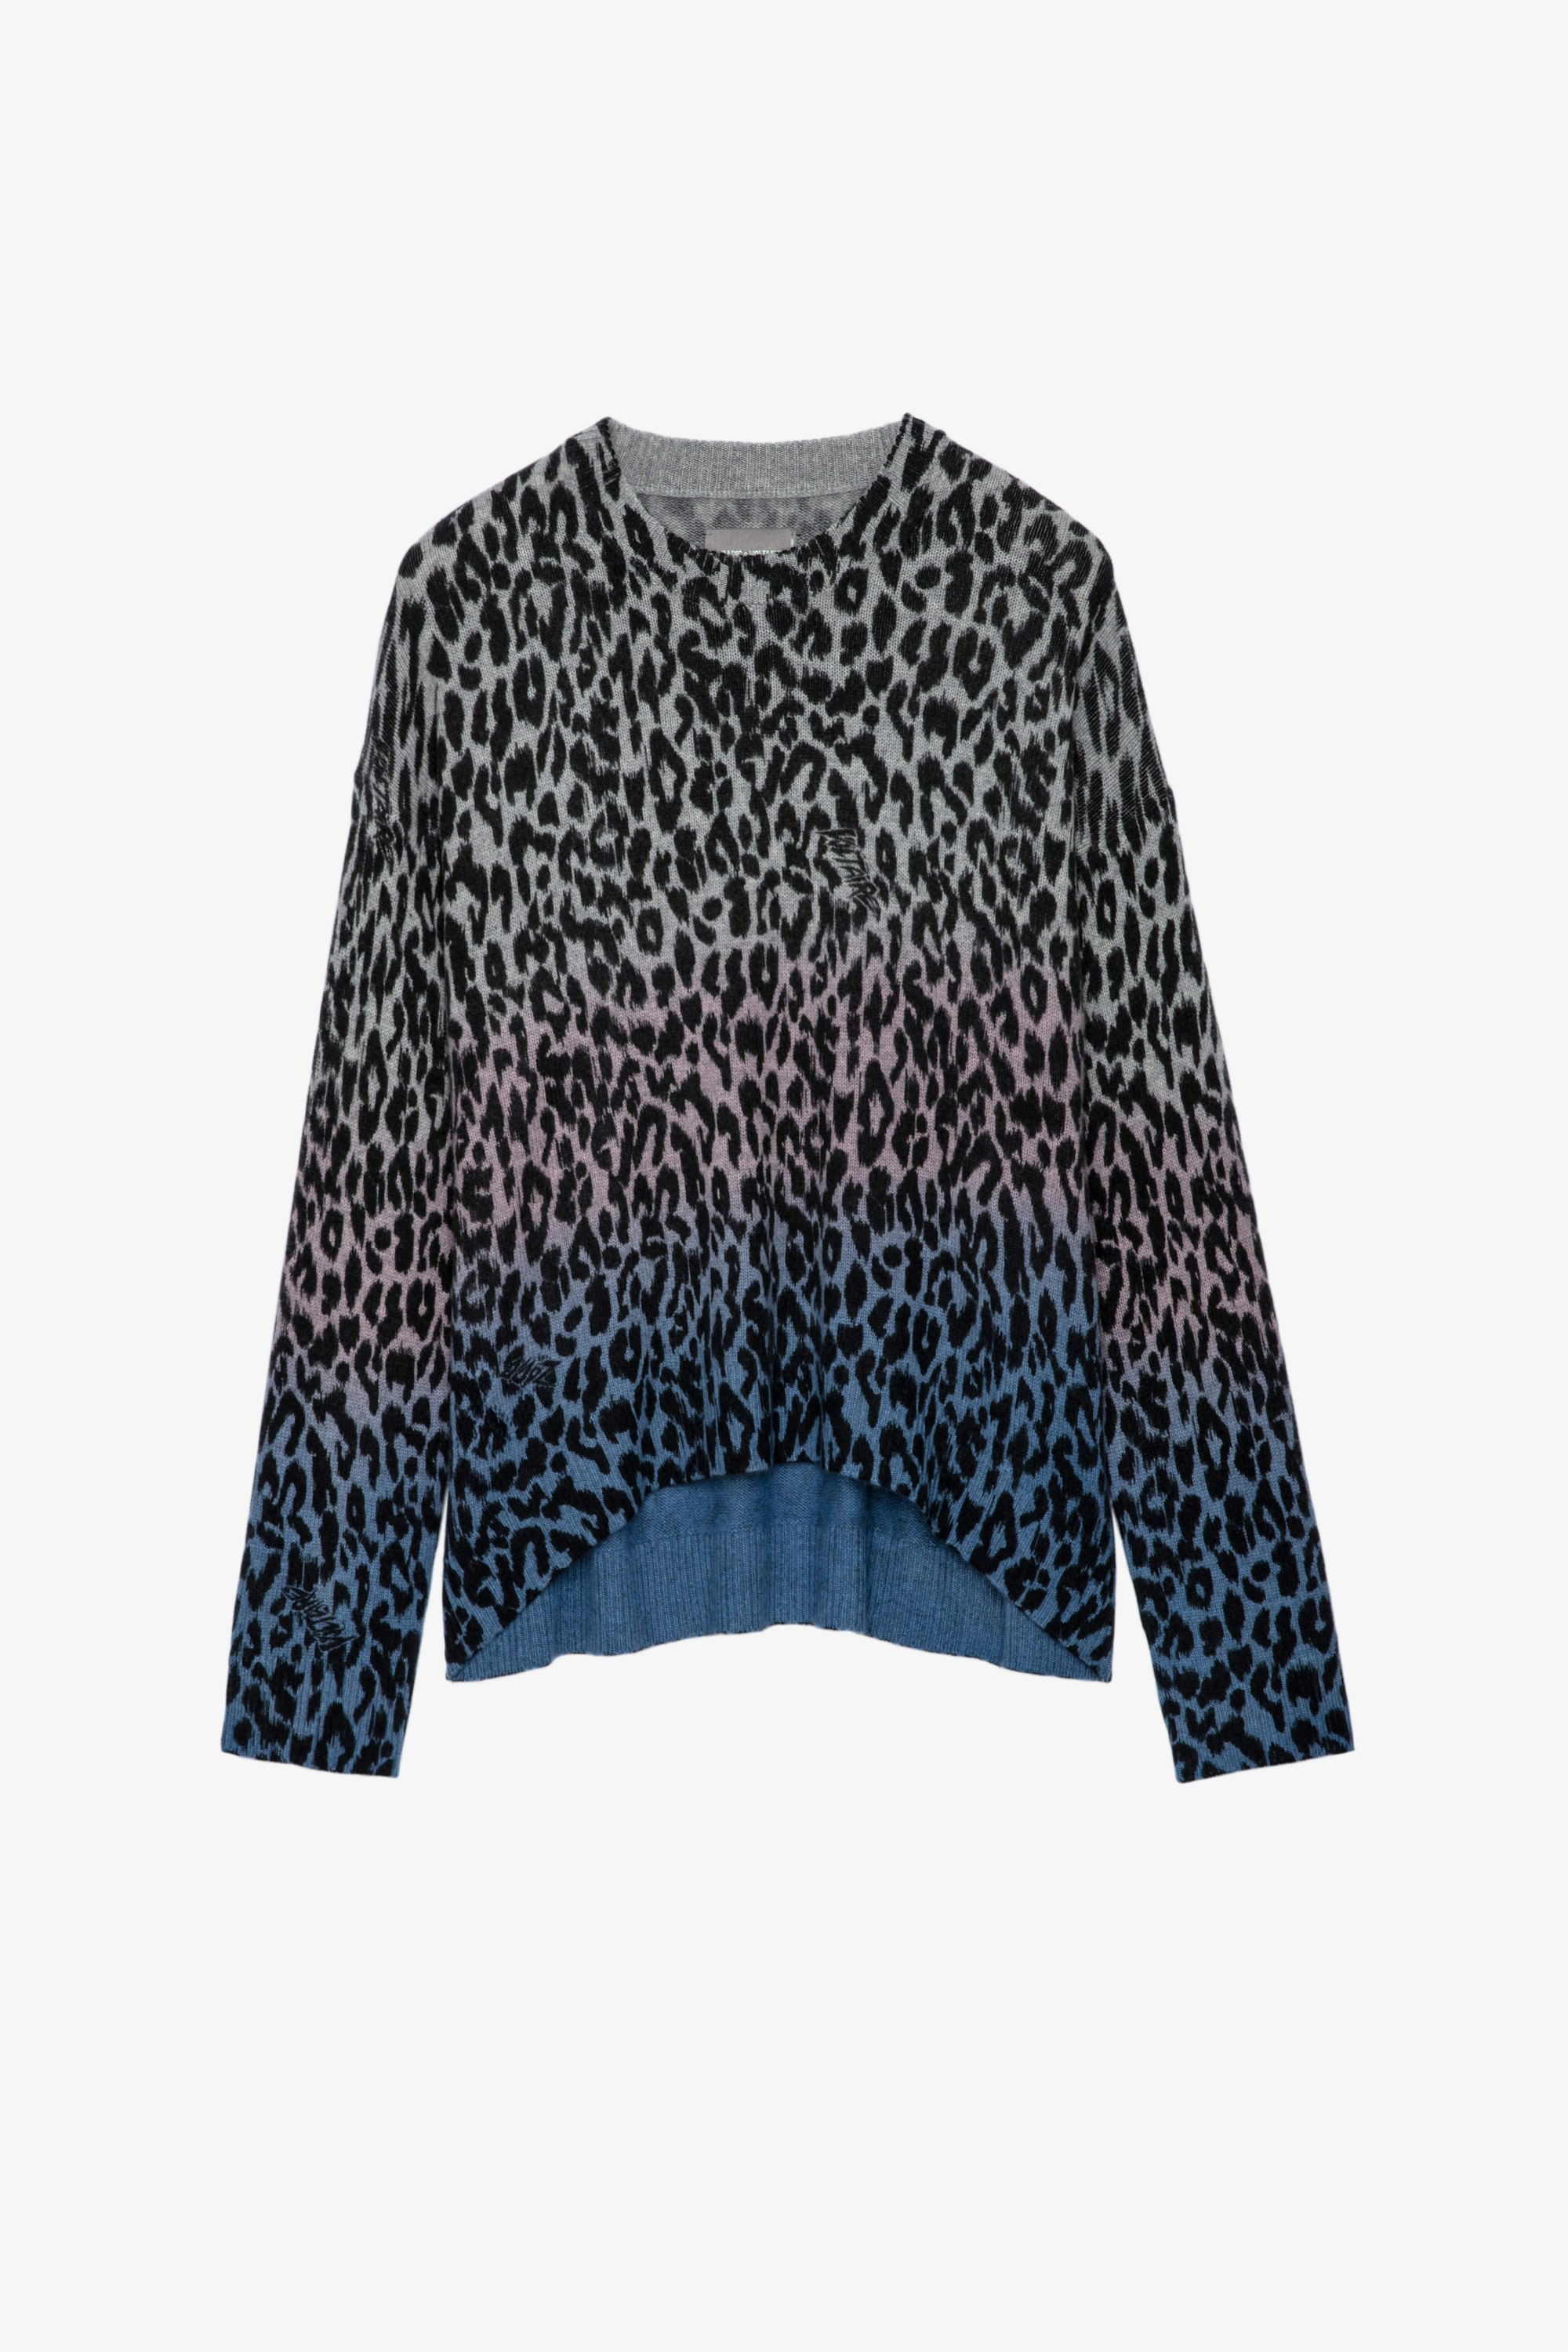 Markus Leo Cashmere Jumper Women’s grey marl cashmere jumper with Voltaire leopard-print motif